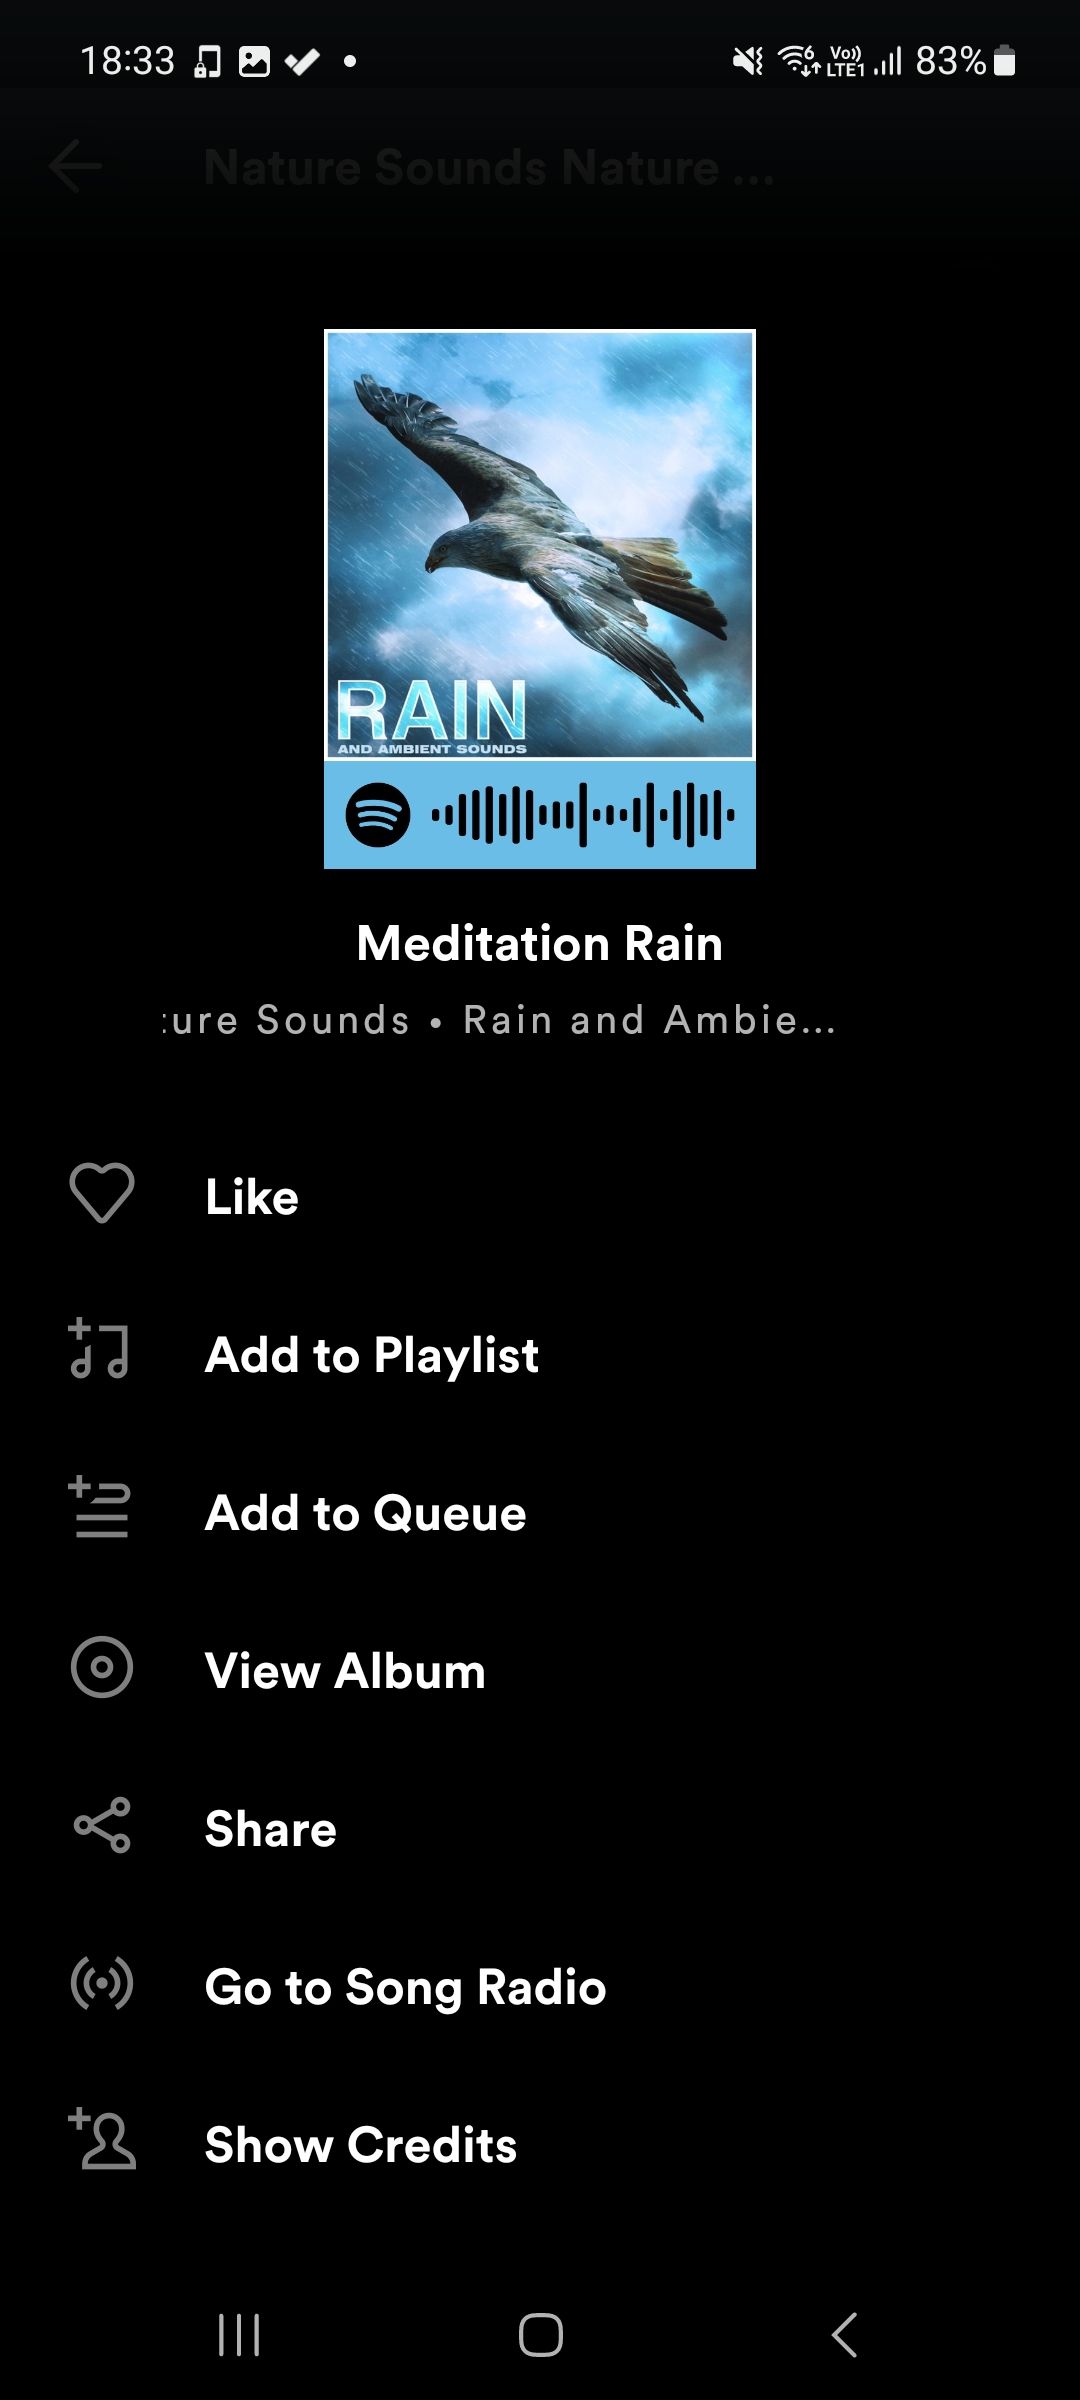 Meditation Rain track in Spotify